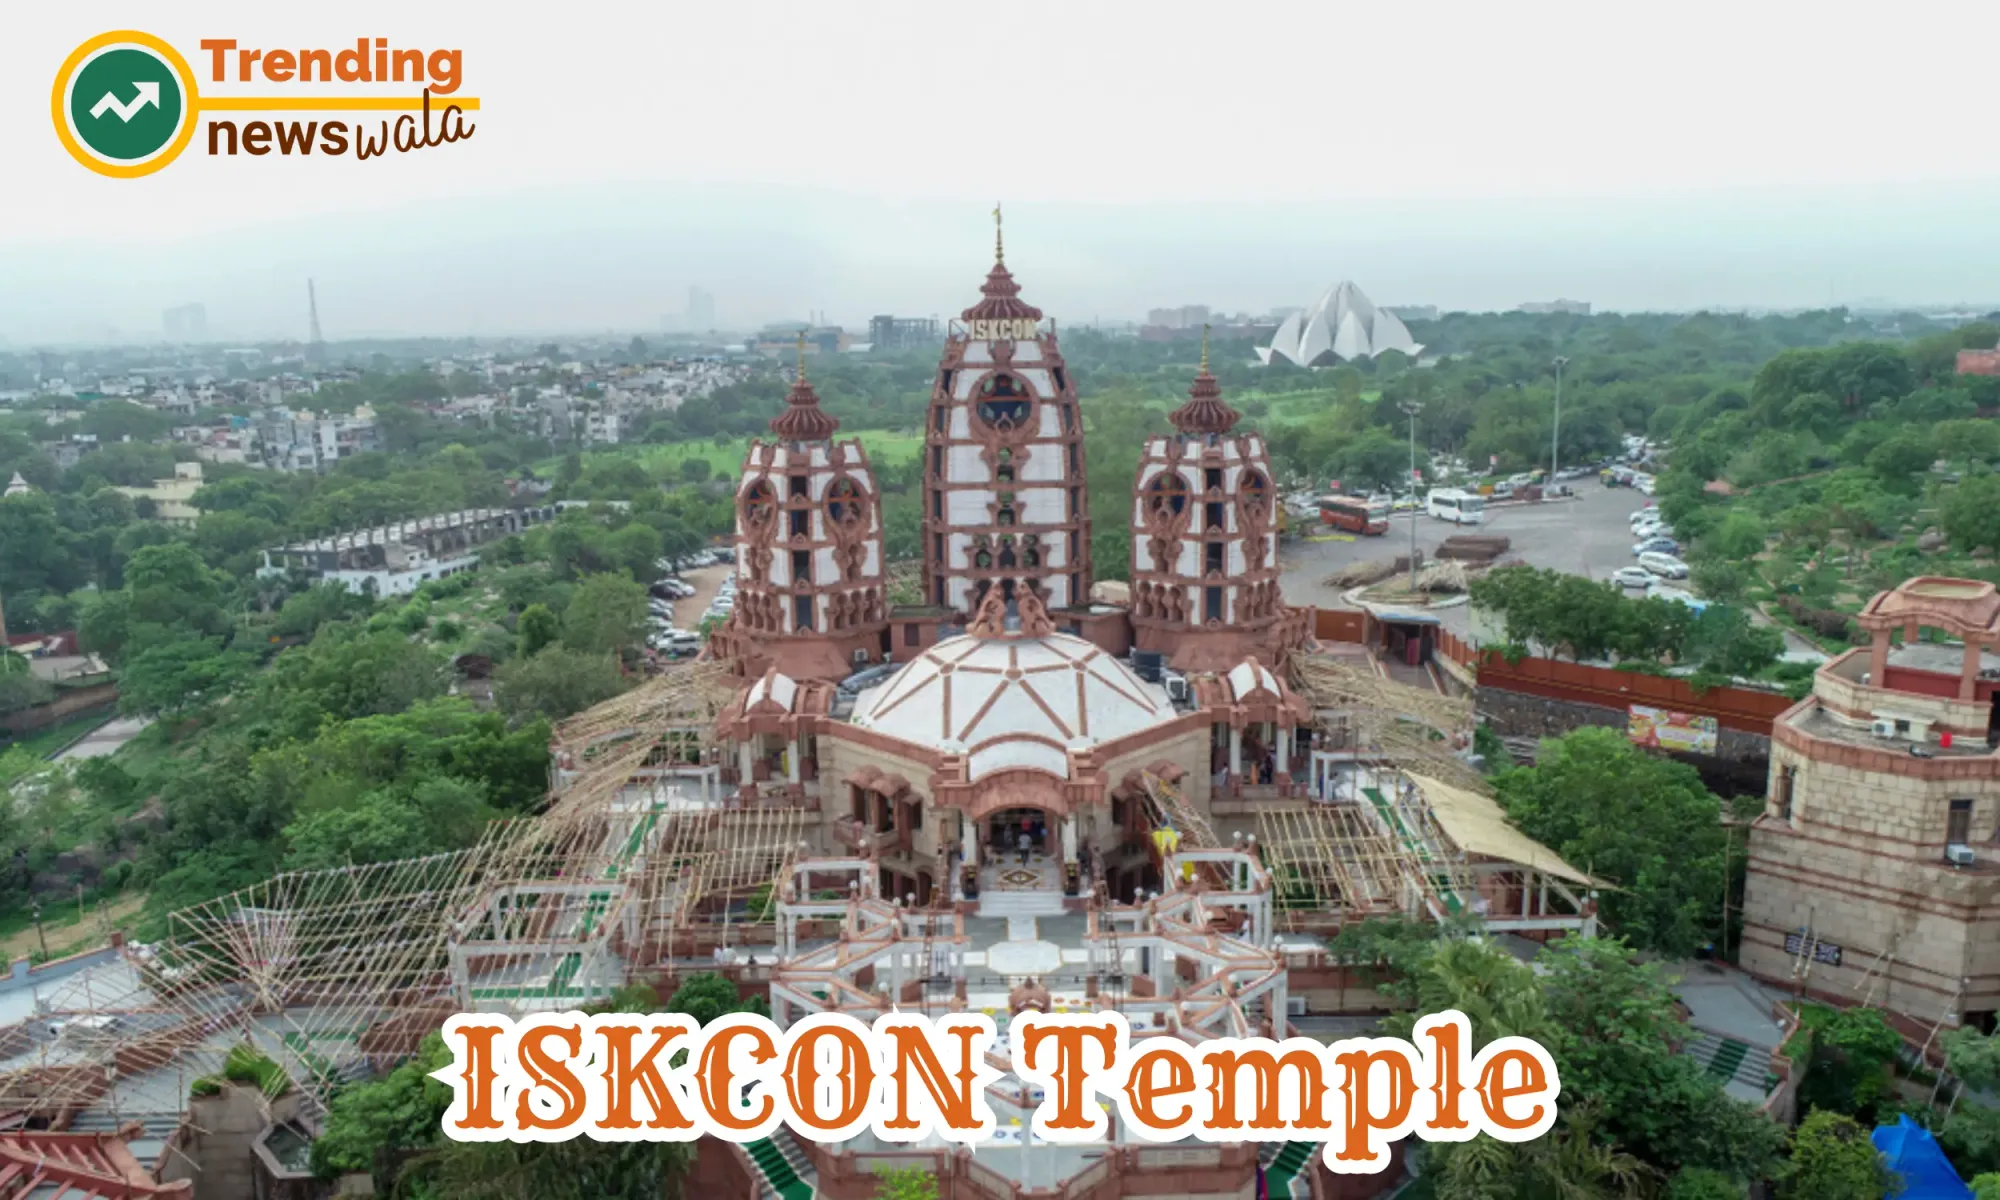 The ISKCON Delhi, also known as the Sri Sri Radha Parthasarathi Mandir, is a Vaishnav temple